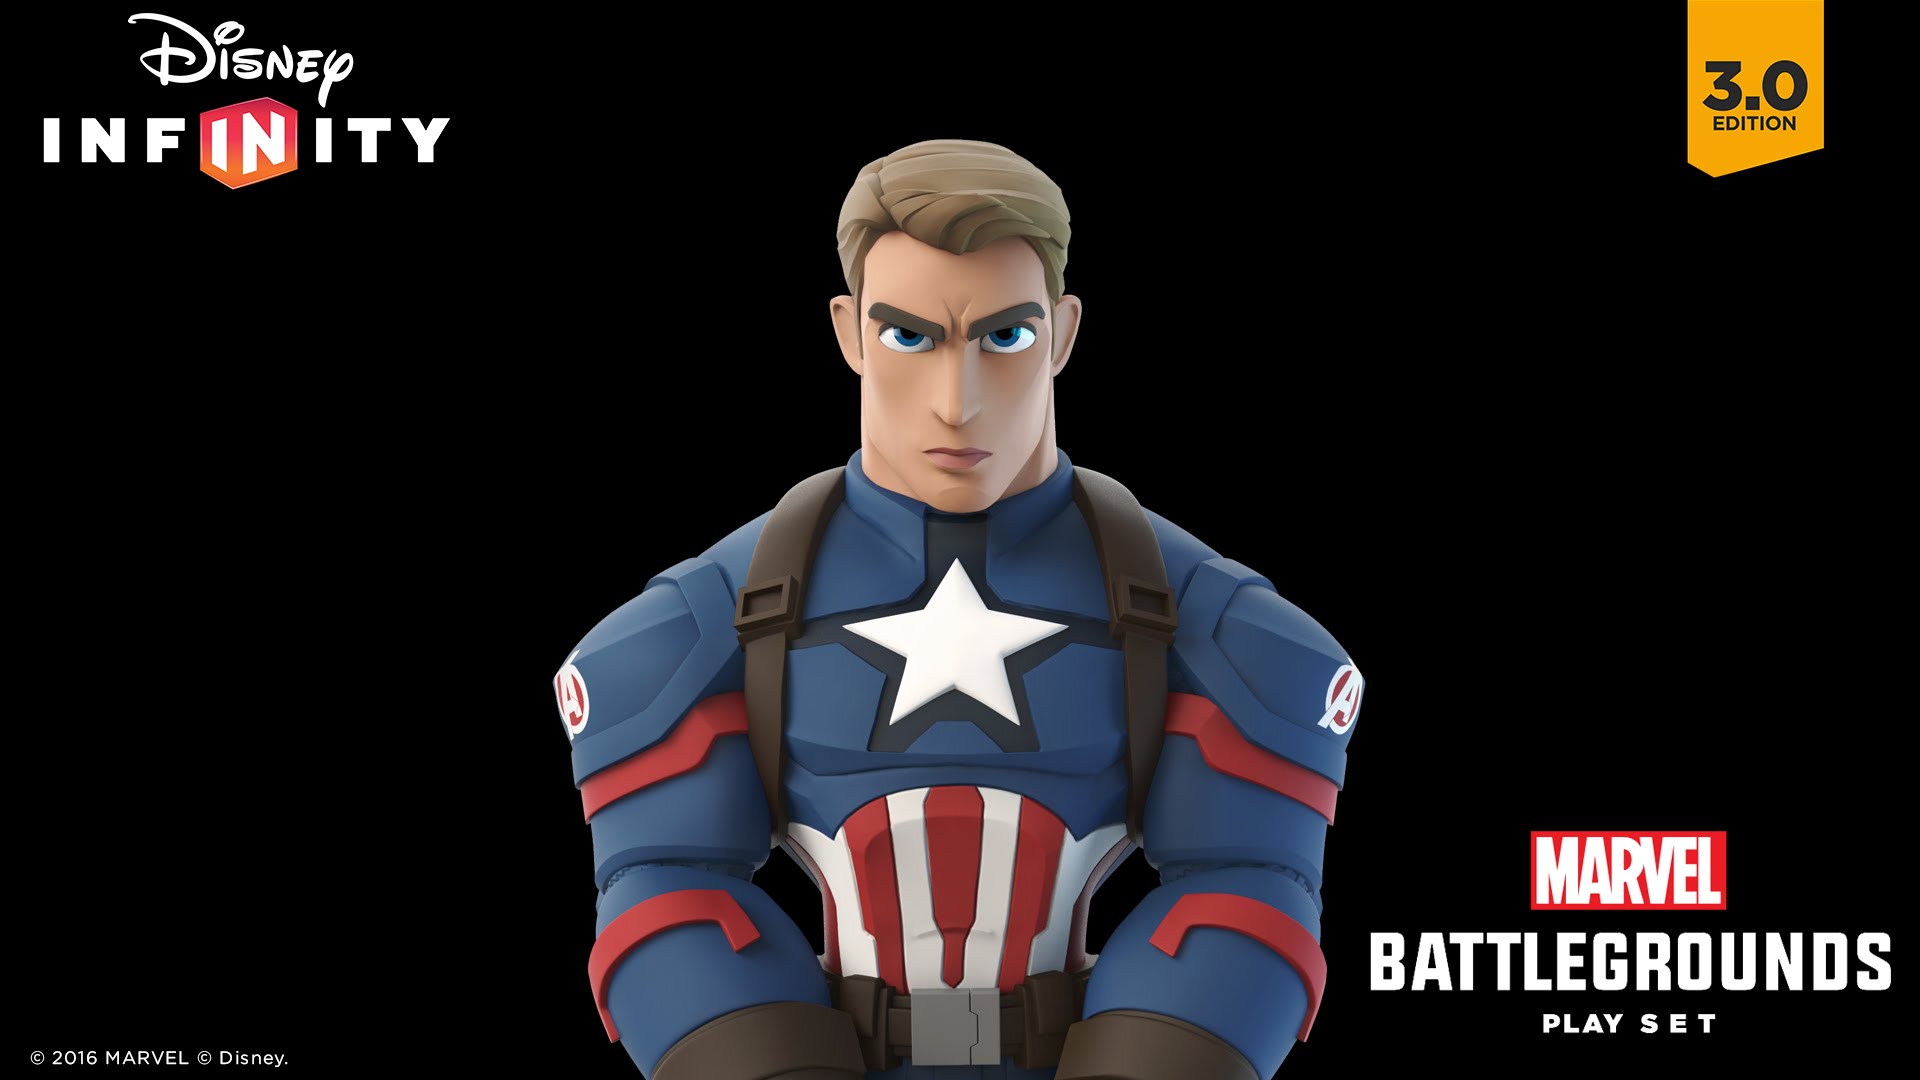 Marvel Battlegrounds Play Set Official Launch Trailer | Disney Infinity 3.0